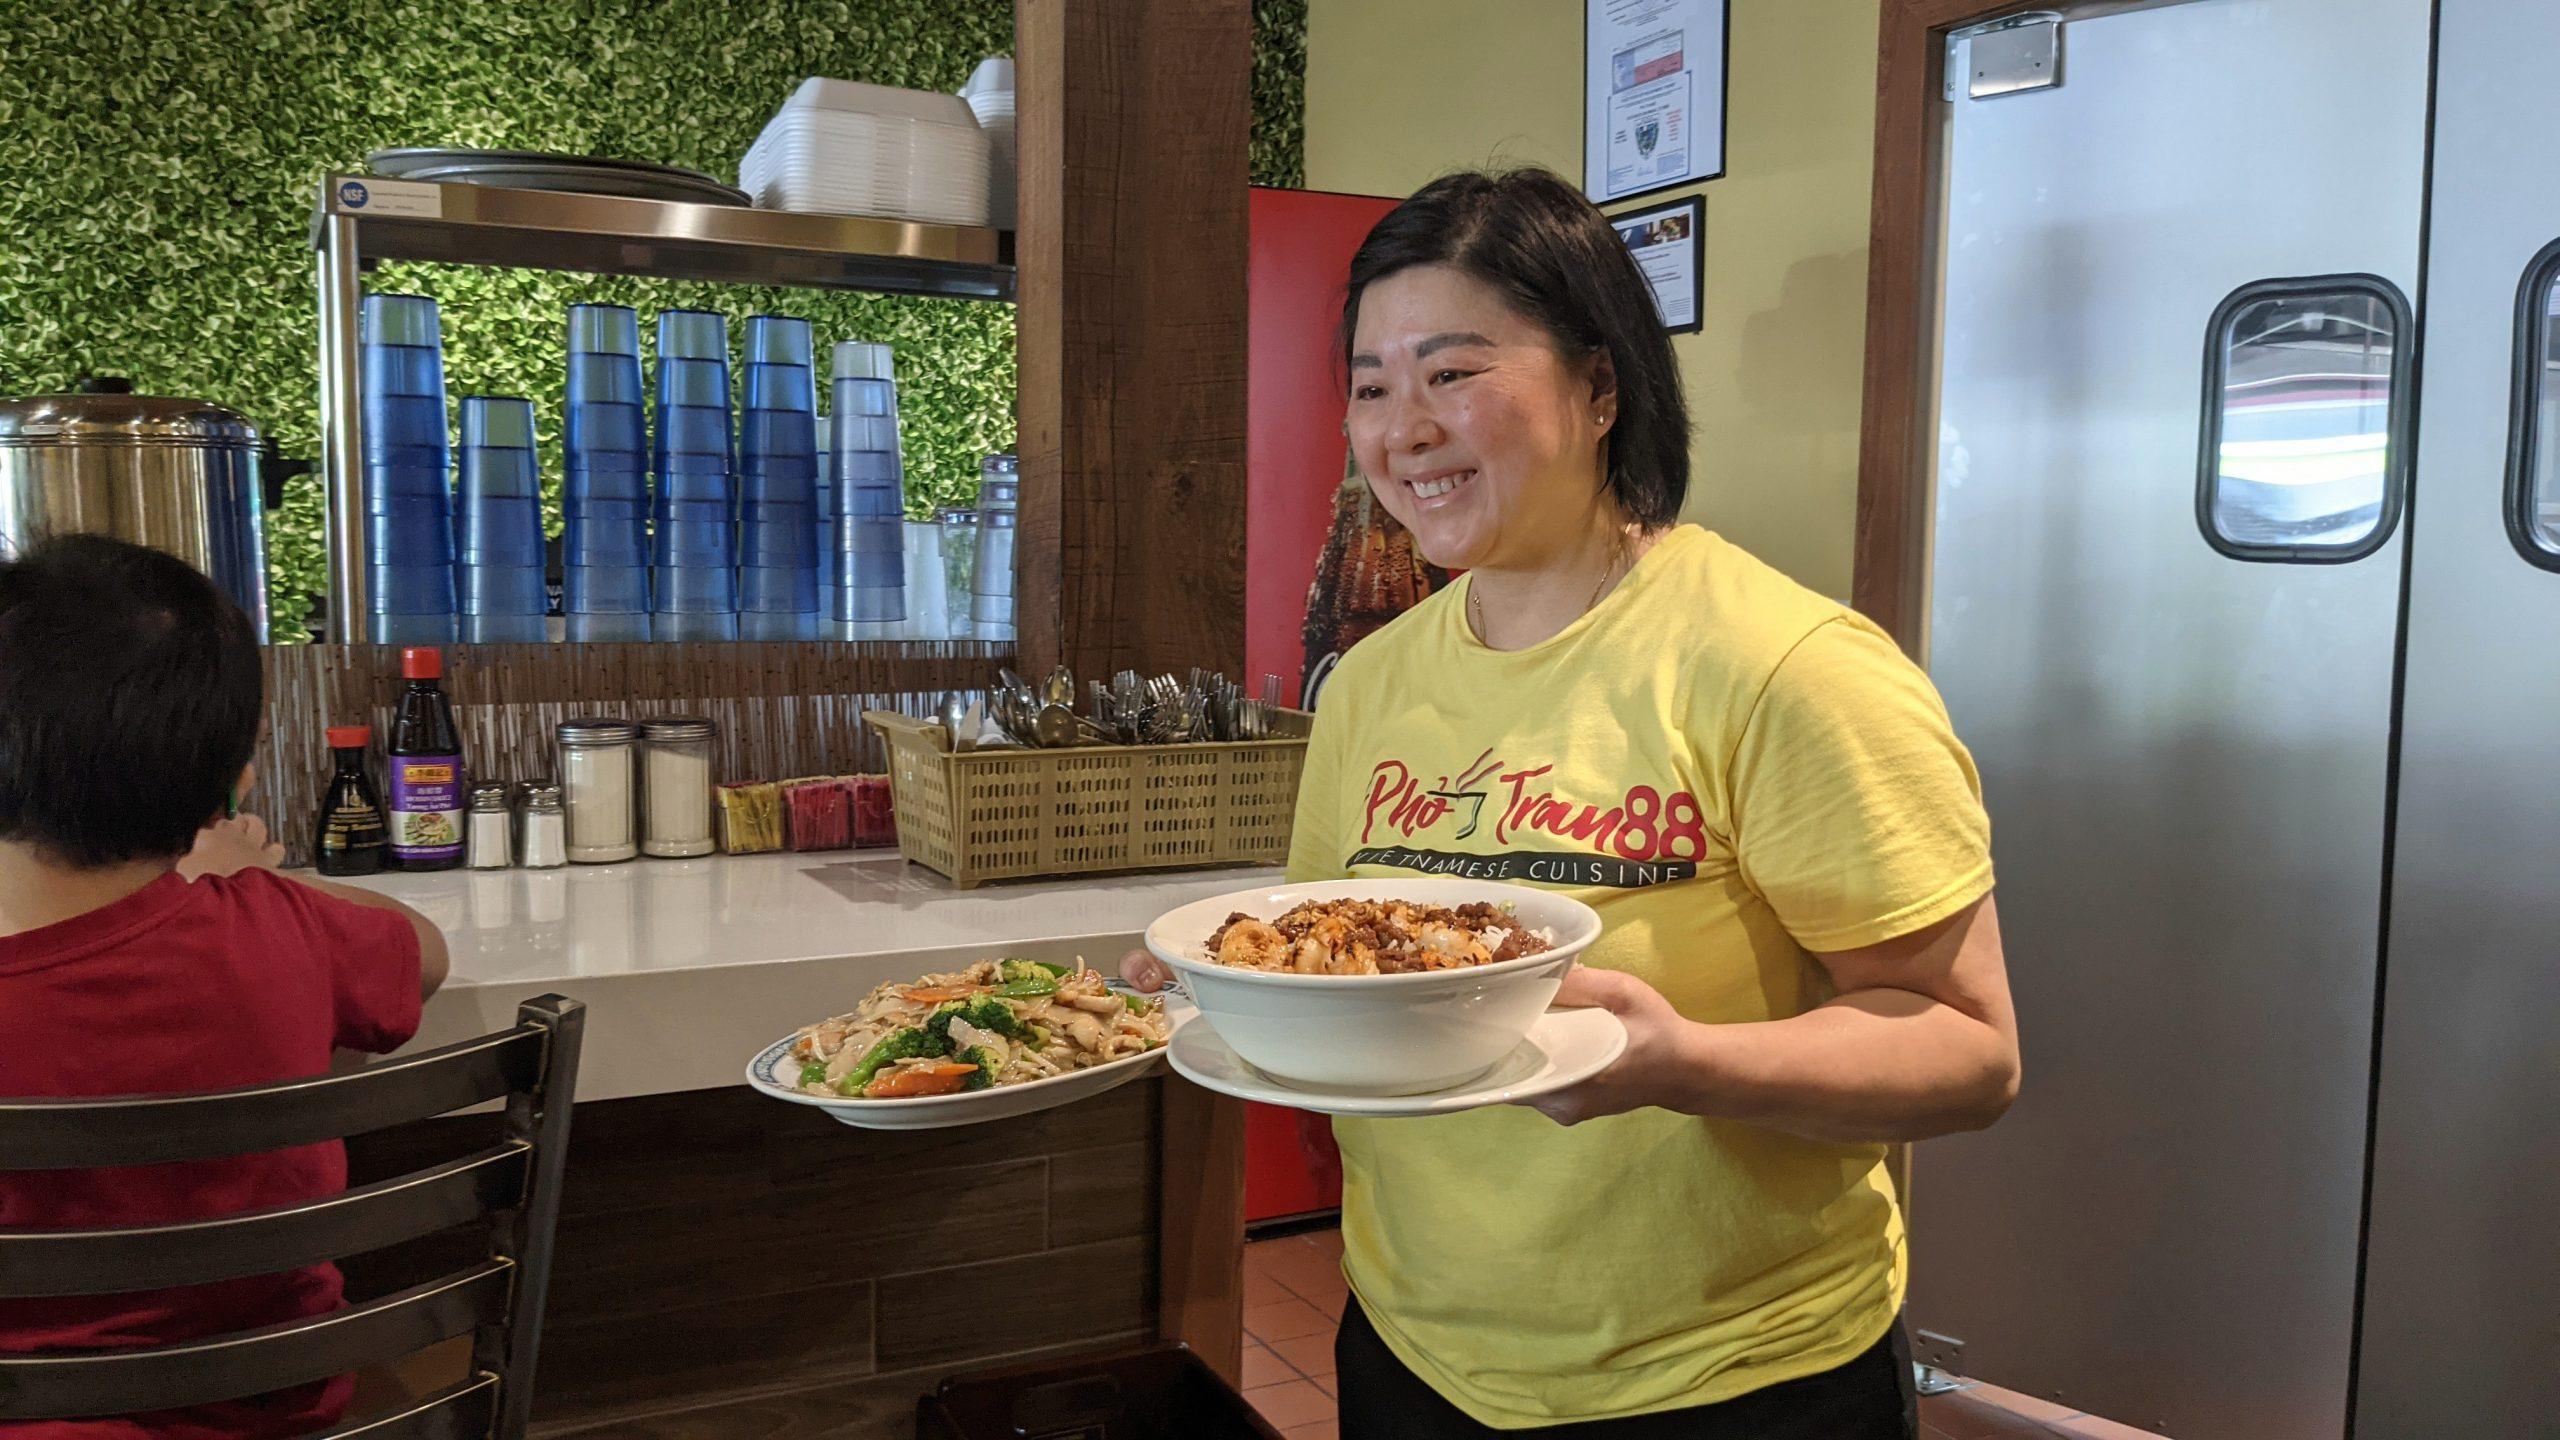 Pho+Tran88+brings+Vietnamese+cuisine+to+downtown+San+Marcos